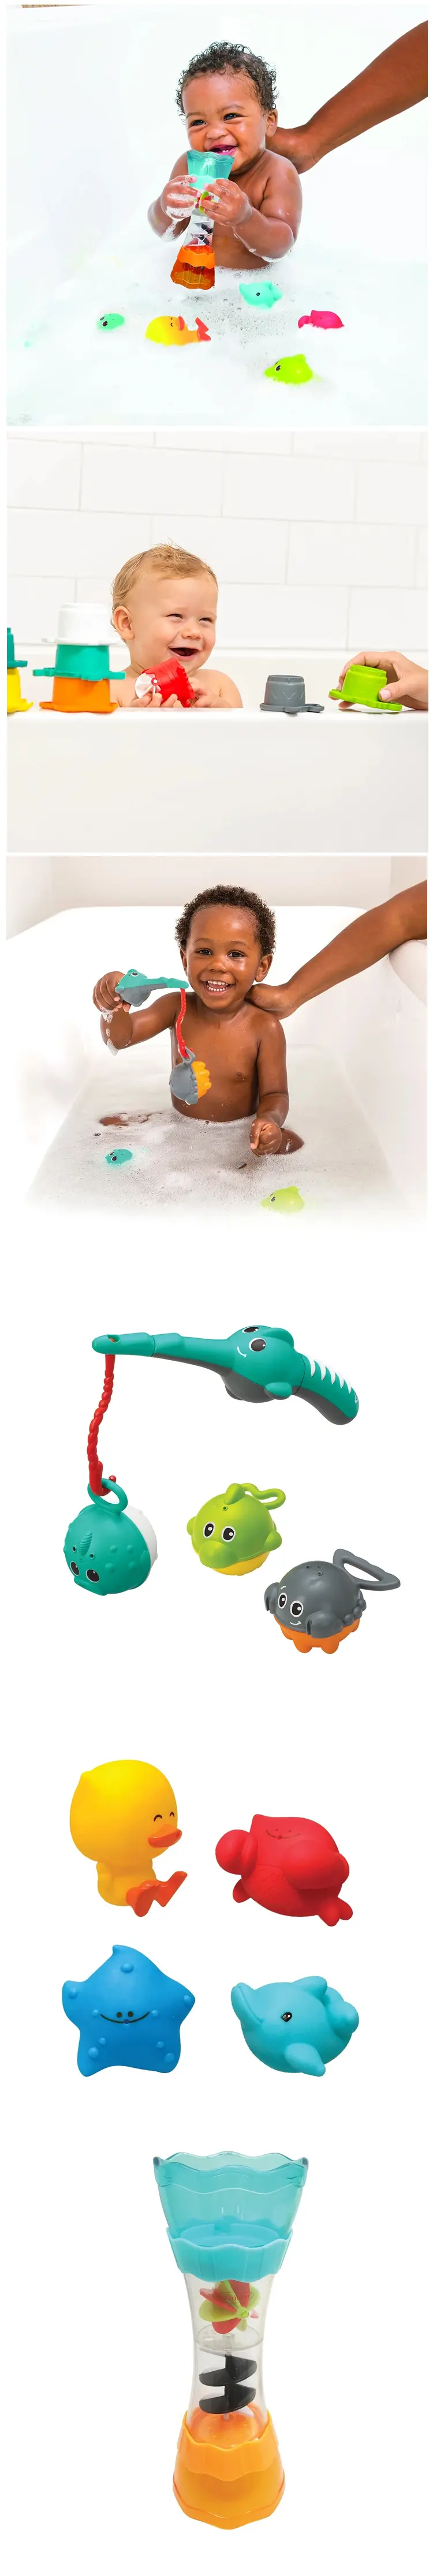 infantino 洗澡玩具套装